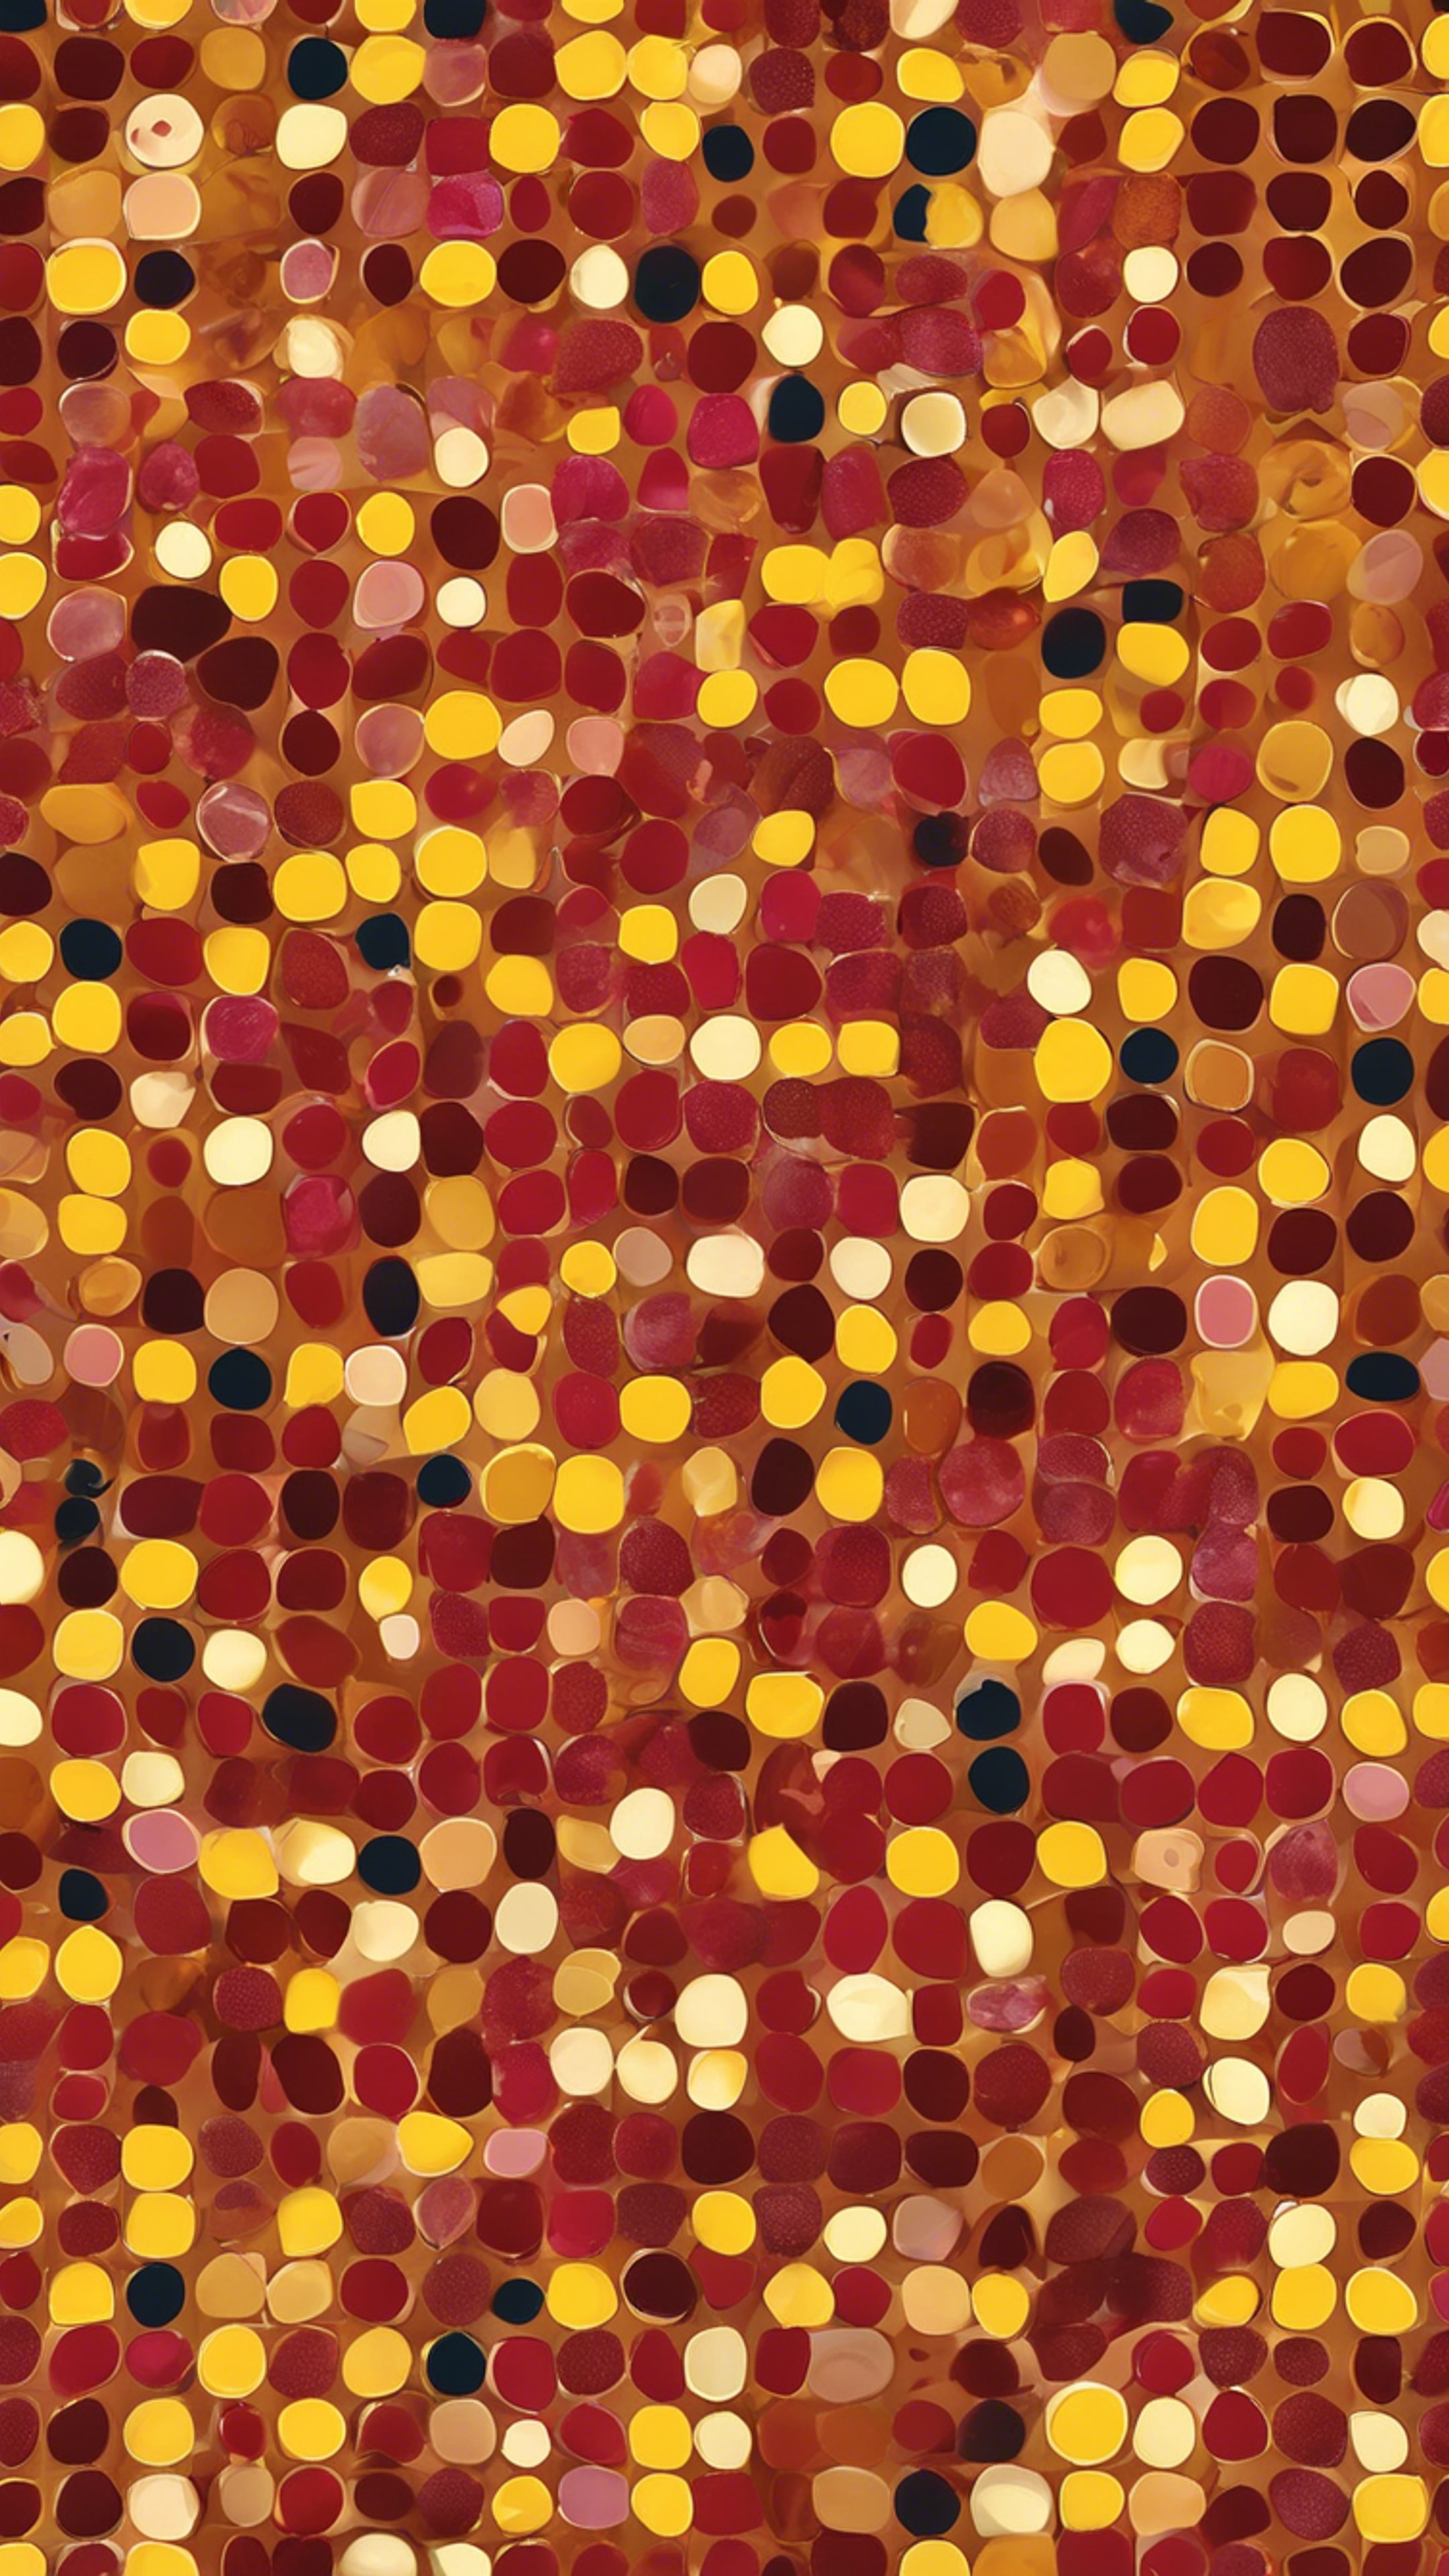 Vibrant pattern of polka dots, a mix of ruby red ones and mustard yellow ones. duvar kağıdı[8e468345fc0d4ef4ba5a]